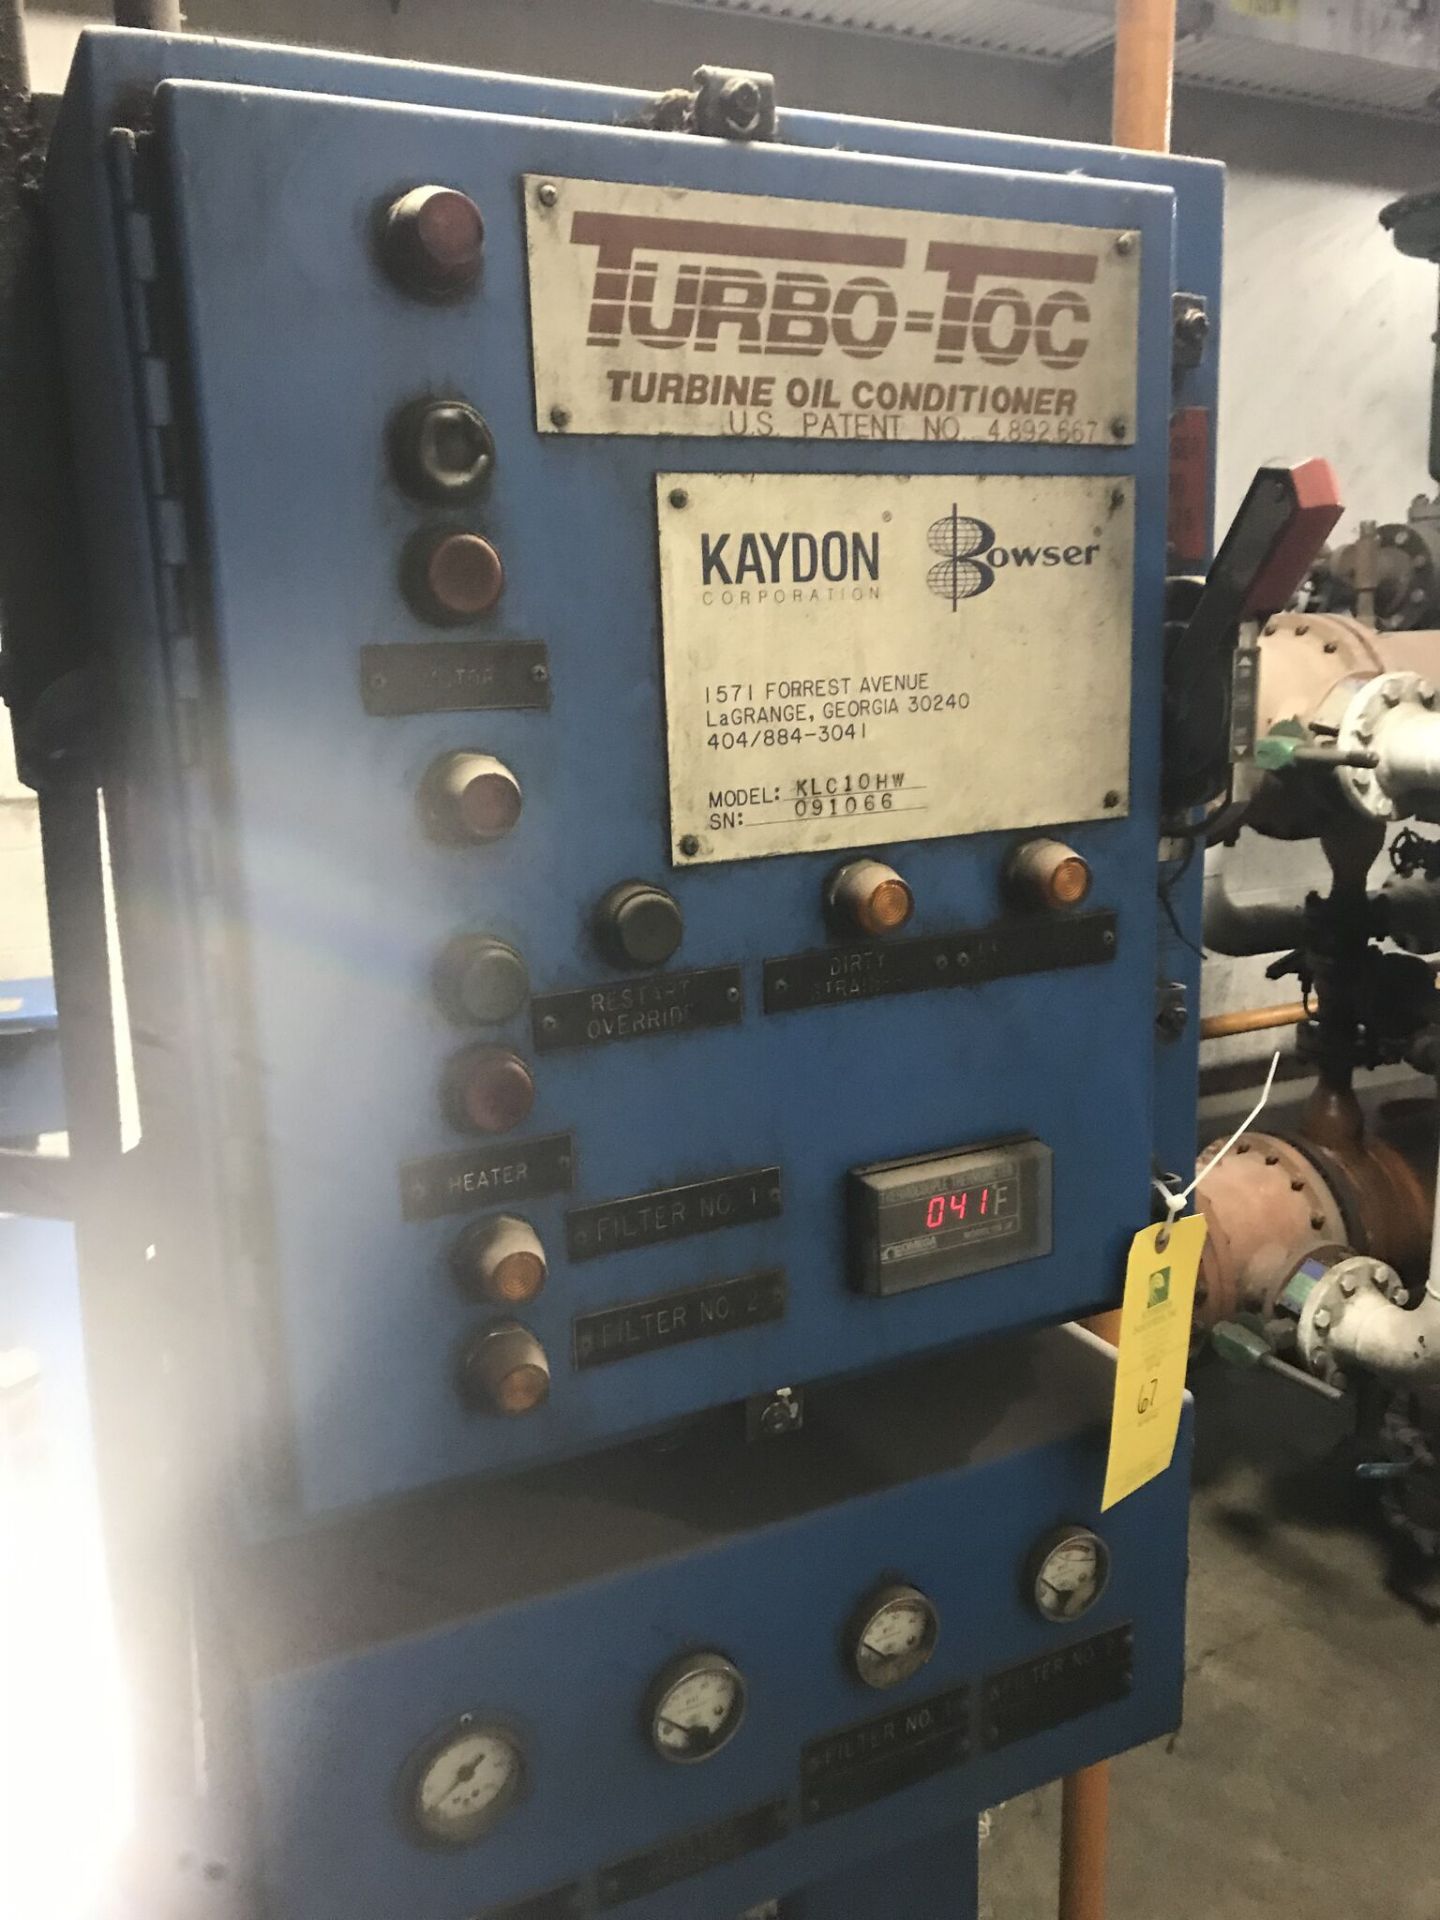 Turbo-Toc Oil Conditioner, Model #KLC10HW, Serial #091066 - Image 6 of 7